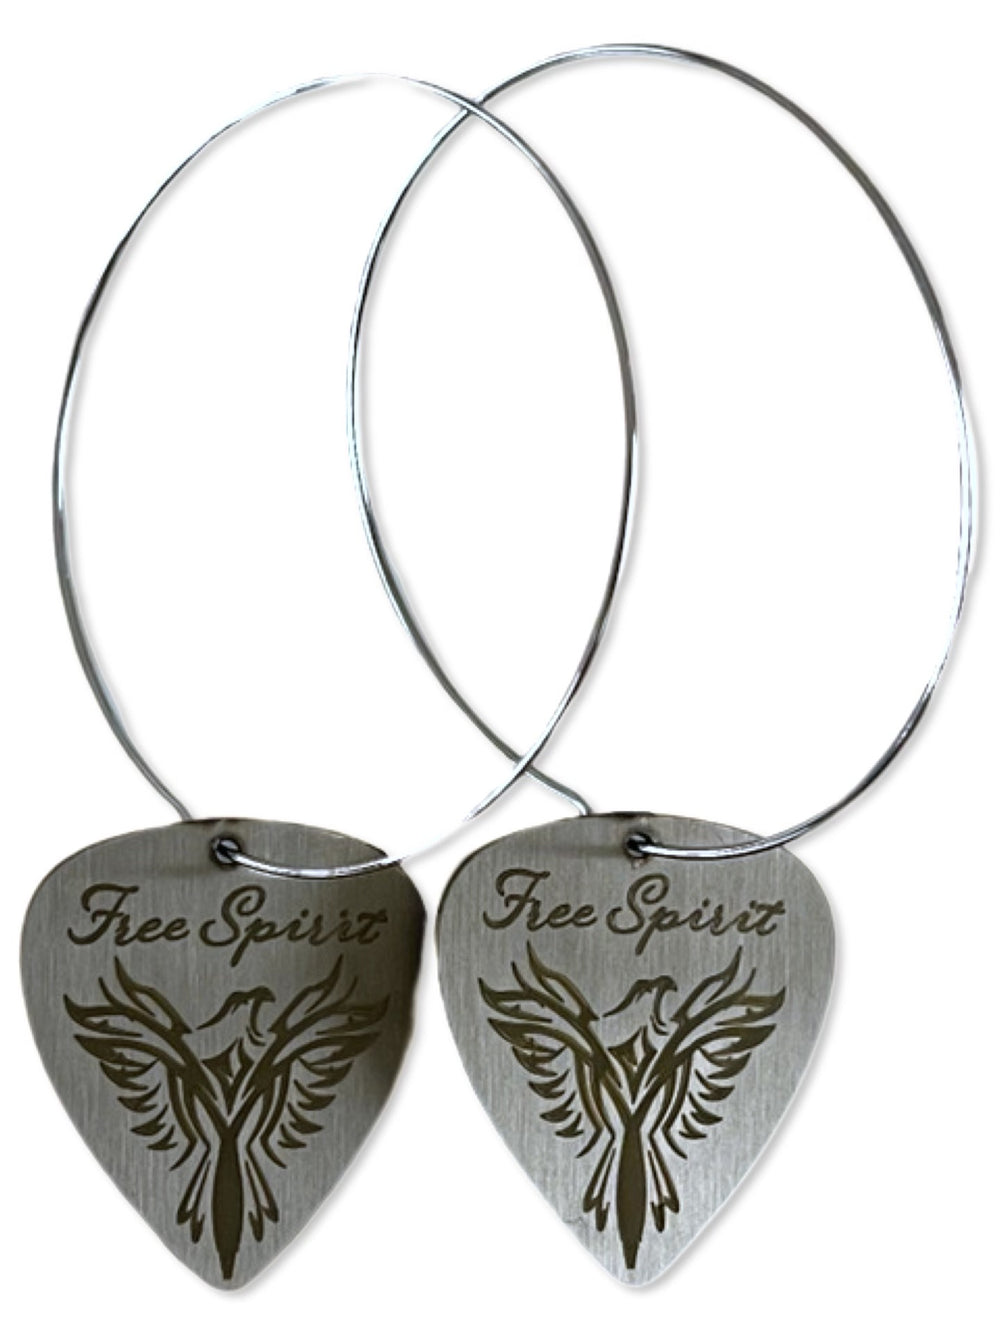 Free Spirit Steel Single Guitar Pick Earrings